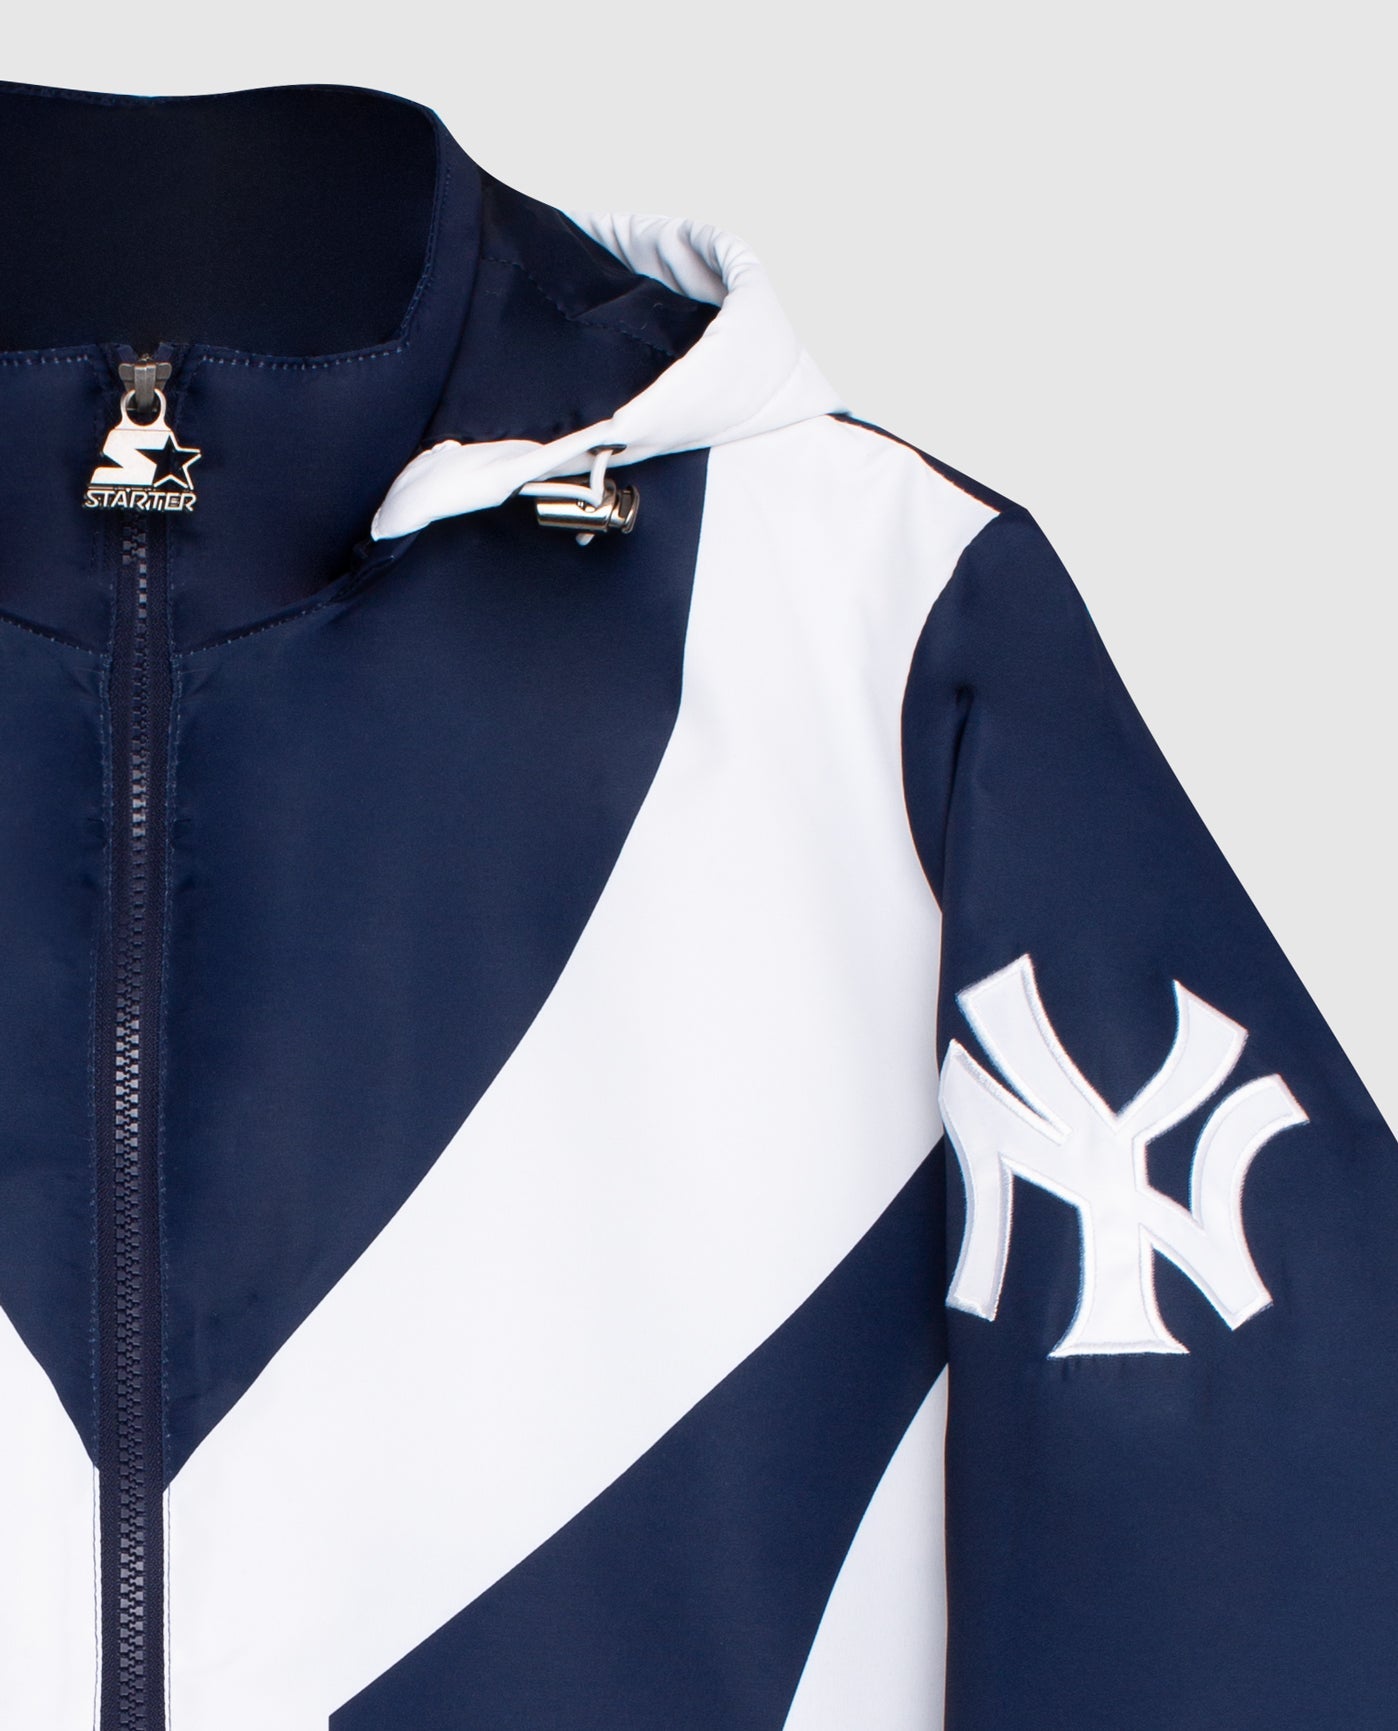 Team Logo On Sleeve Of New York Yankees Hooded Nylon Full-Zip Jacket | Yankees Navy